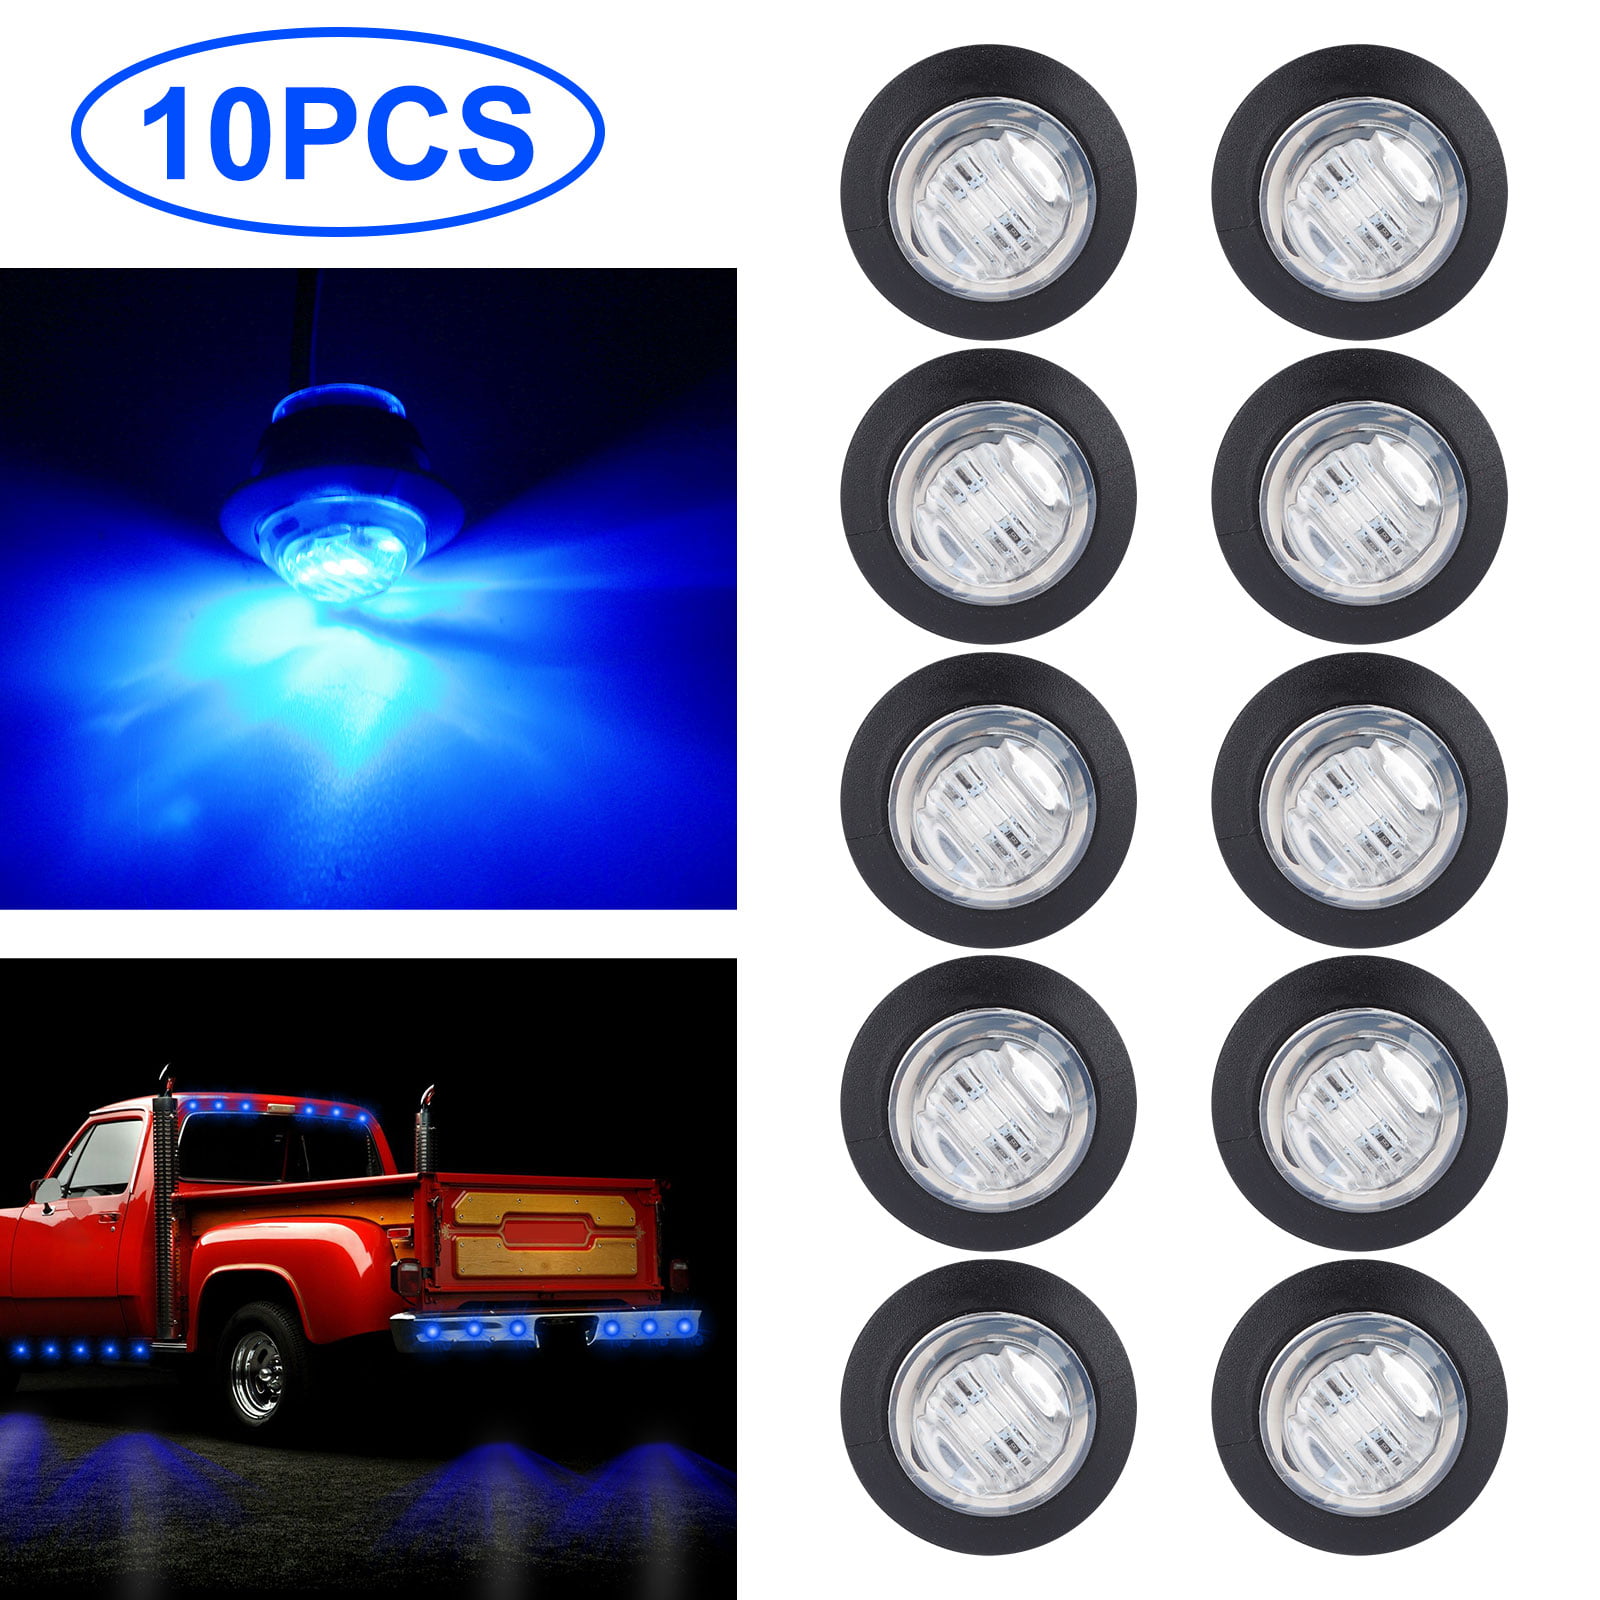 10X White LED Clearance Side Marker Truck Trailer Van Lights 12V Waterproof Lamp